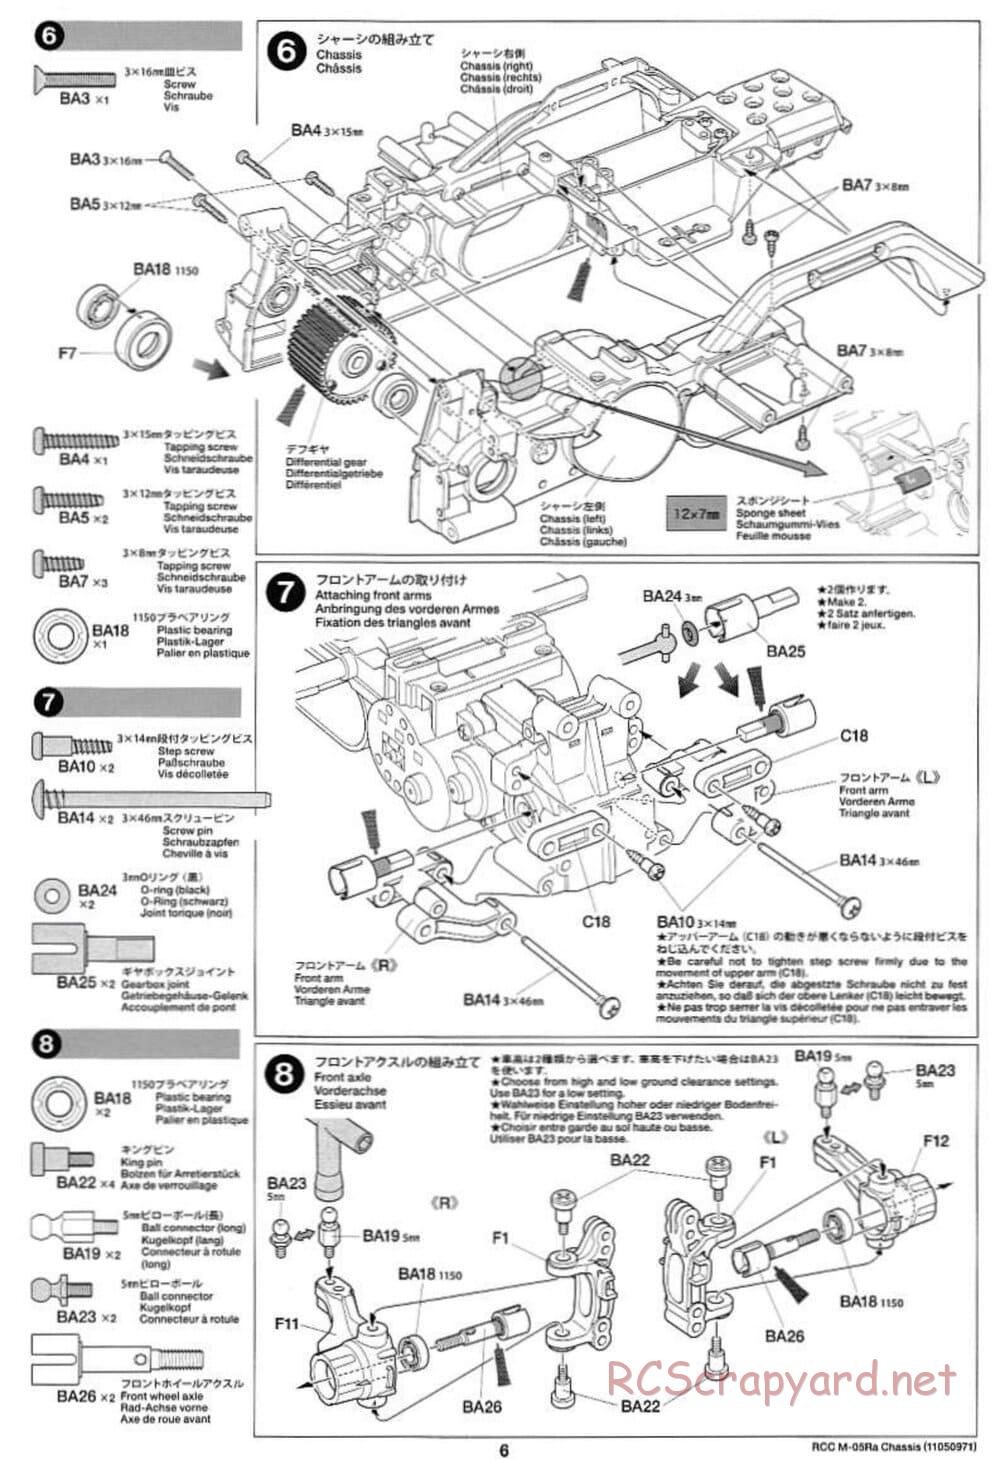 Tamiya - M-05Ra Chassis - Manual - Page 6